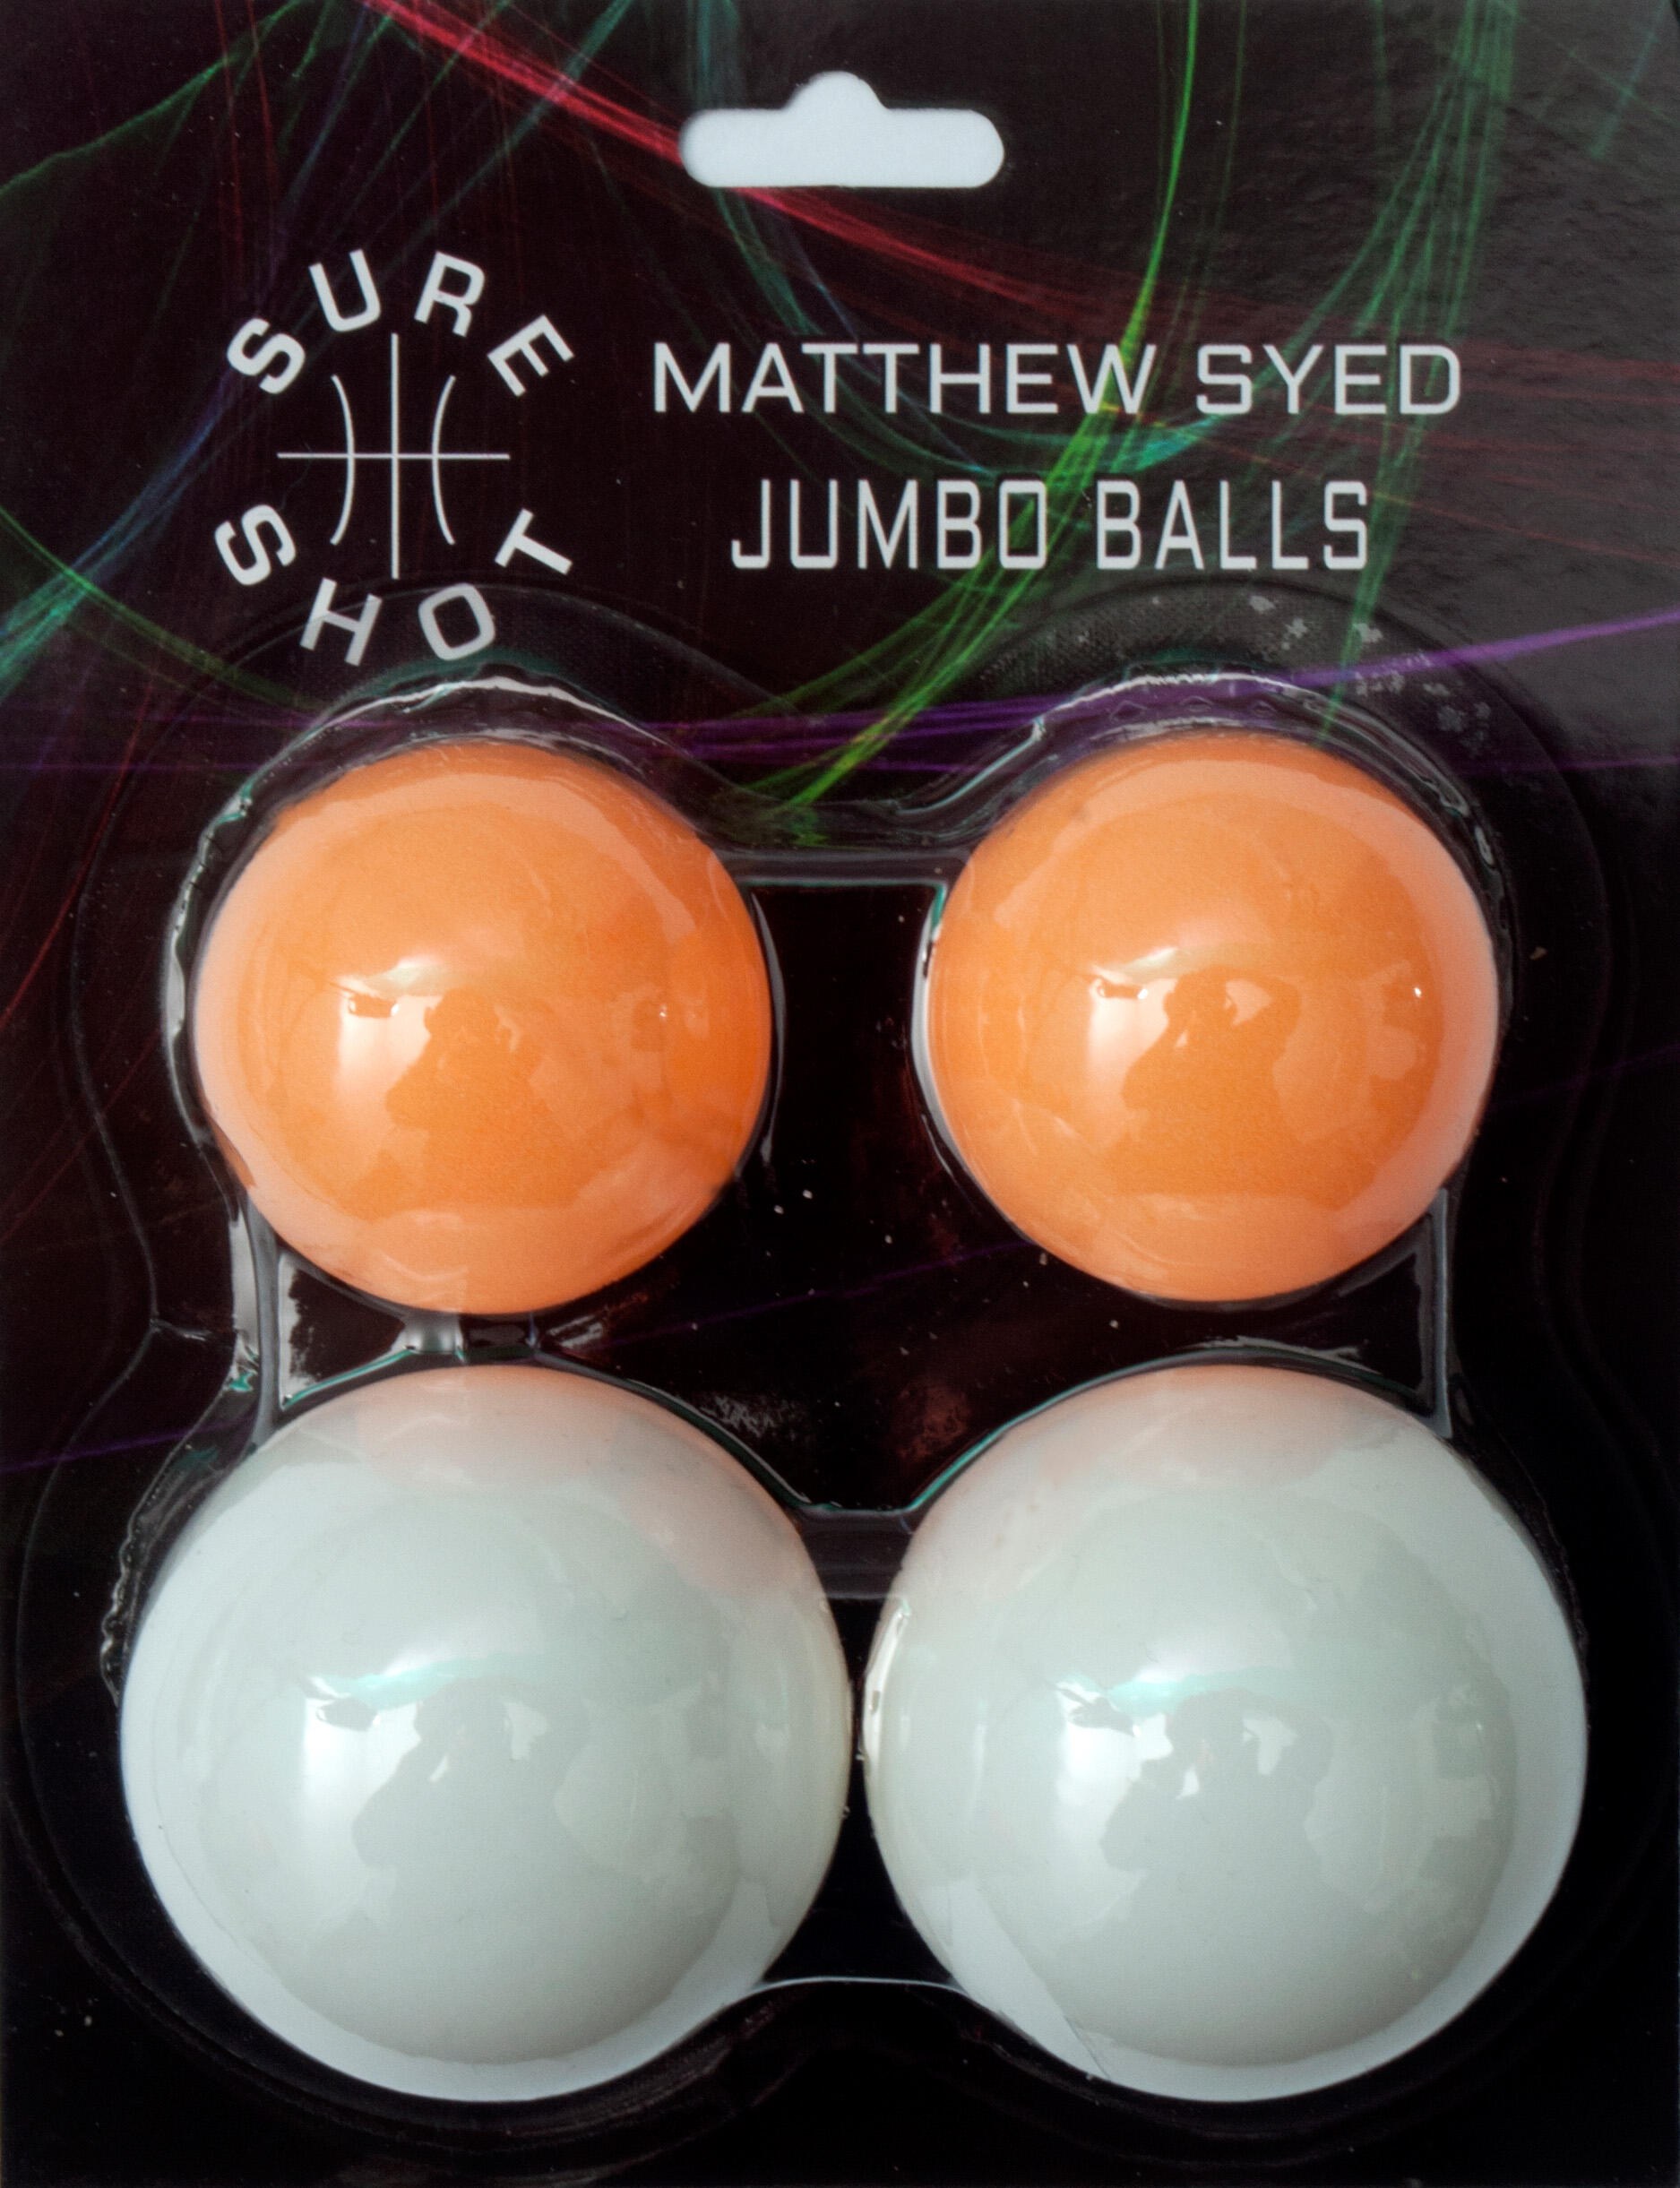 SURE SHOT Sure Shot Matthew Syed Jumbo Balls (Pack of 4)